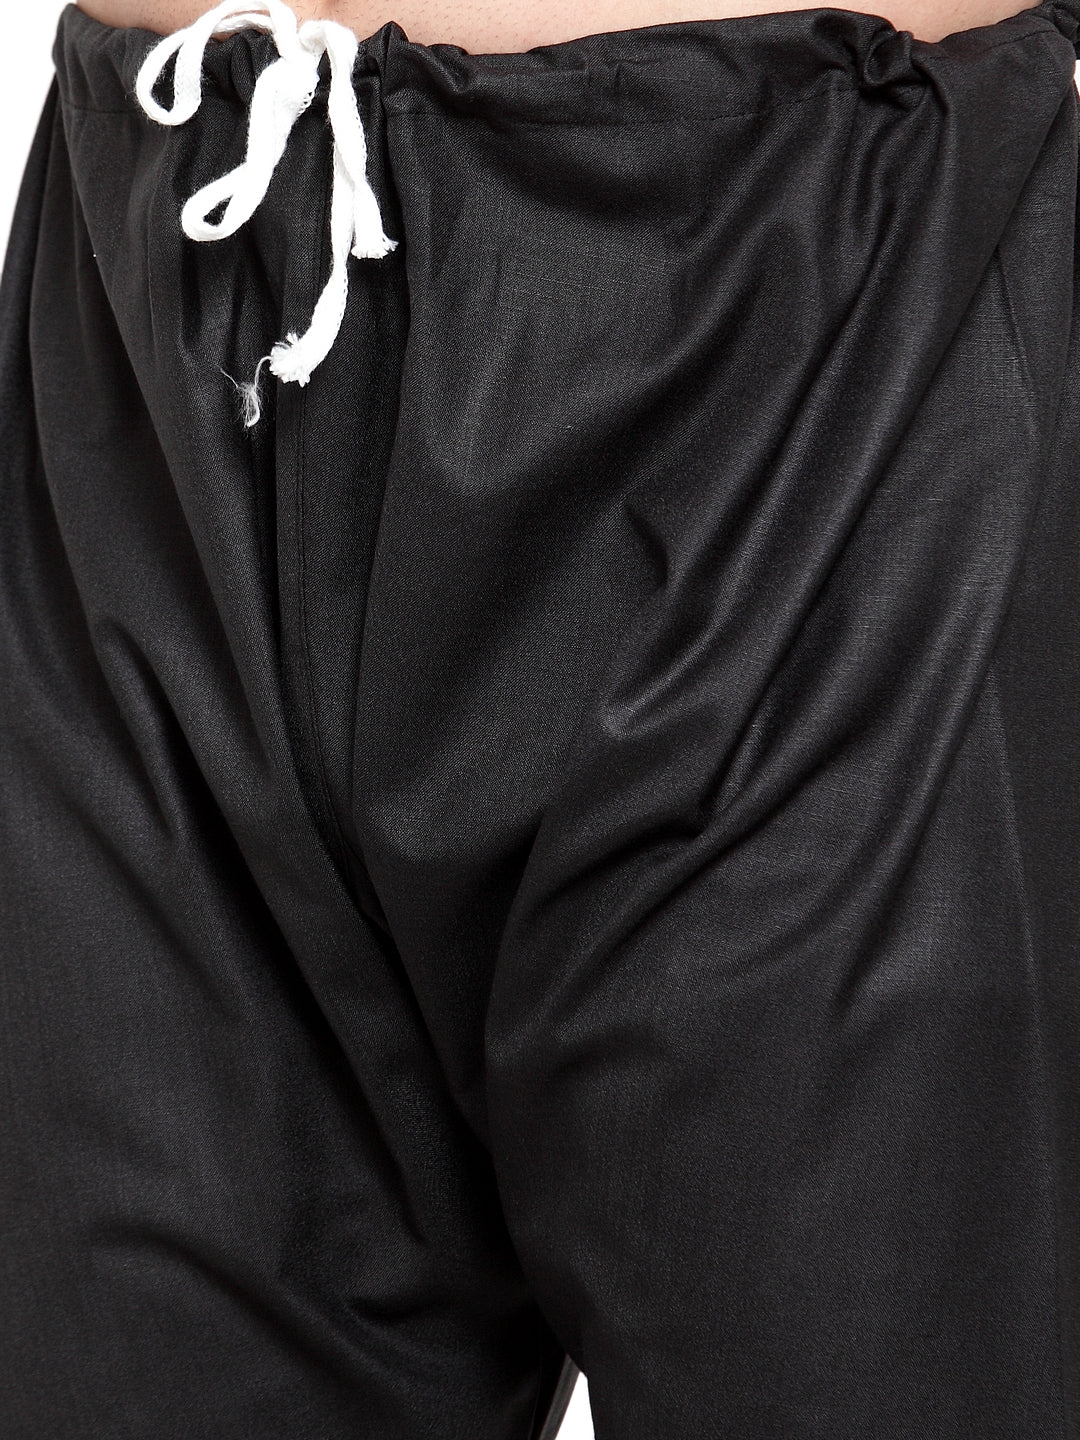 Jompers Men's Solid Cotton Kurta Pajama with Printed Waistcoat ( JOKP WC 4061 Maroon-B )